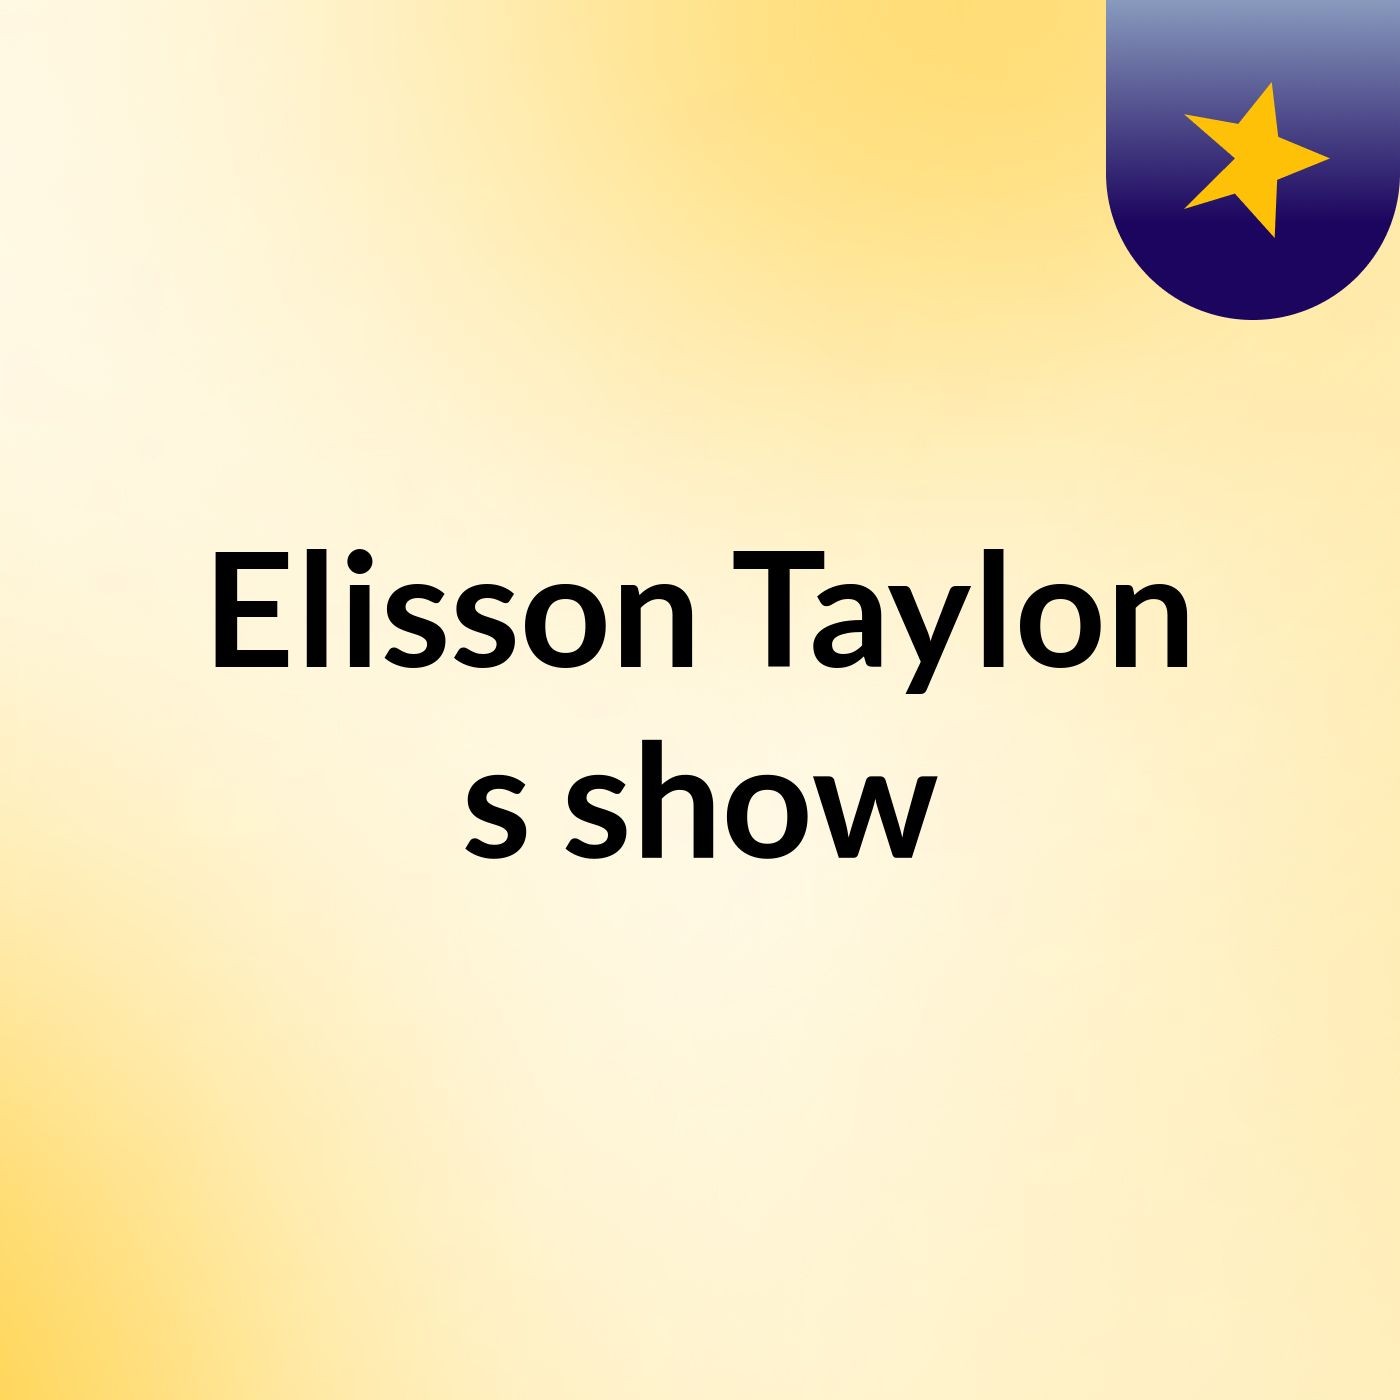 Elisson Taylon's show